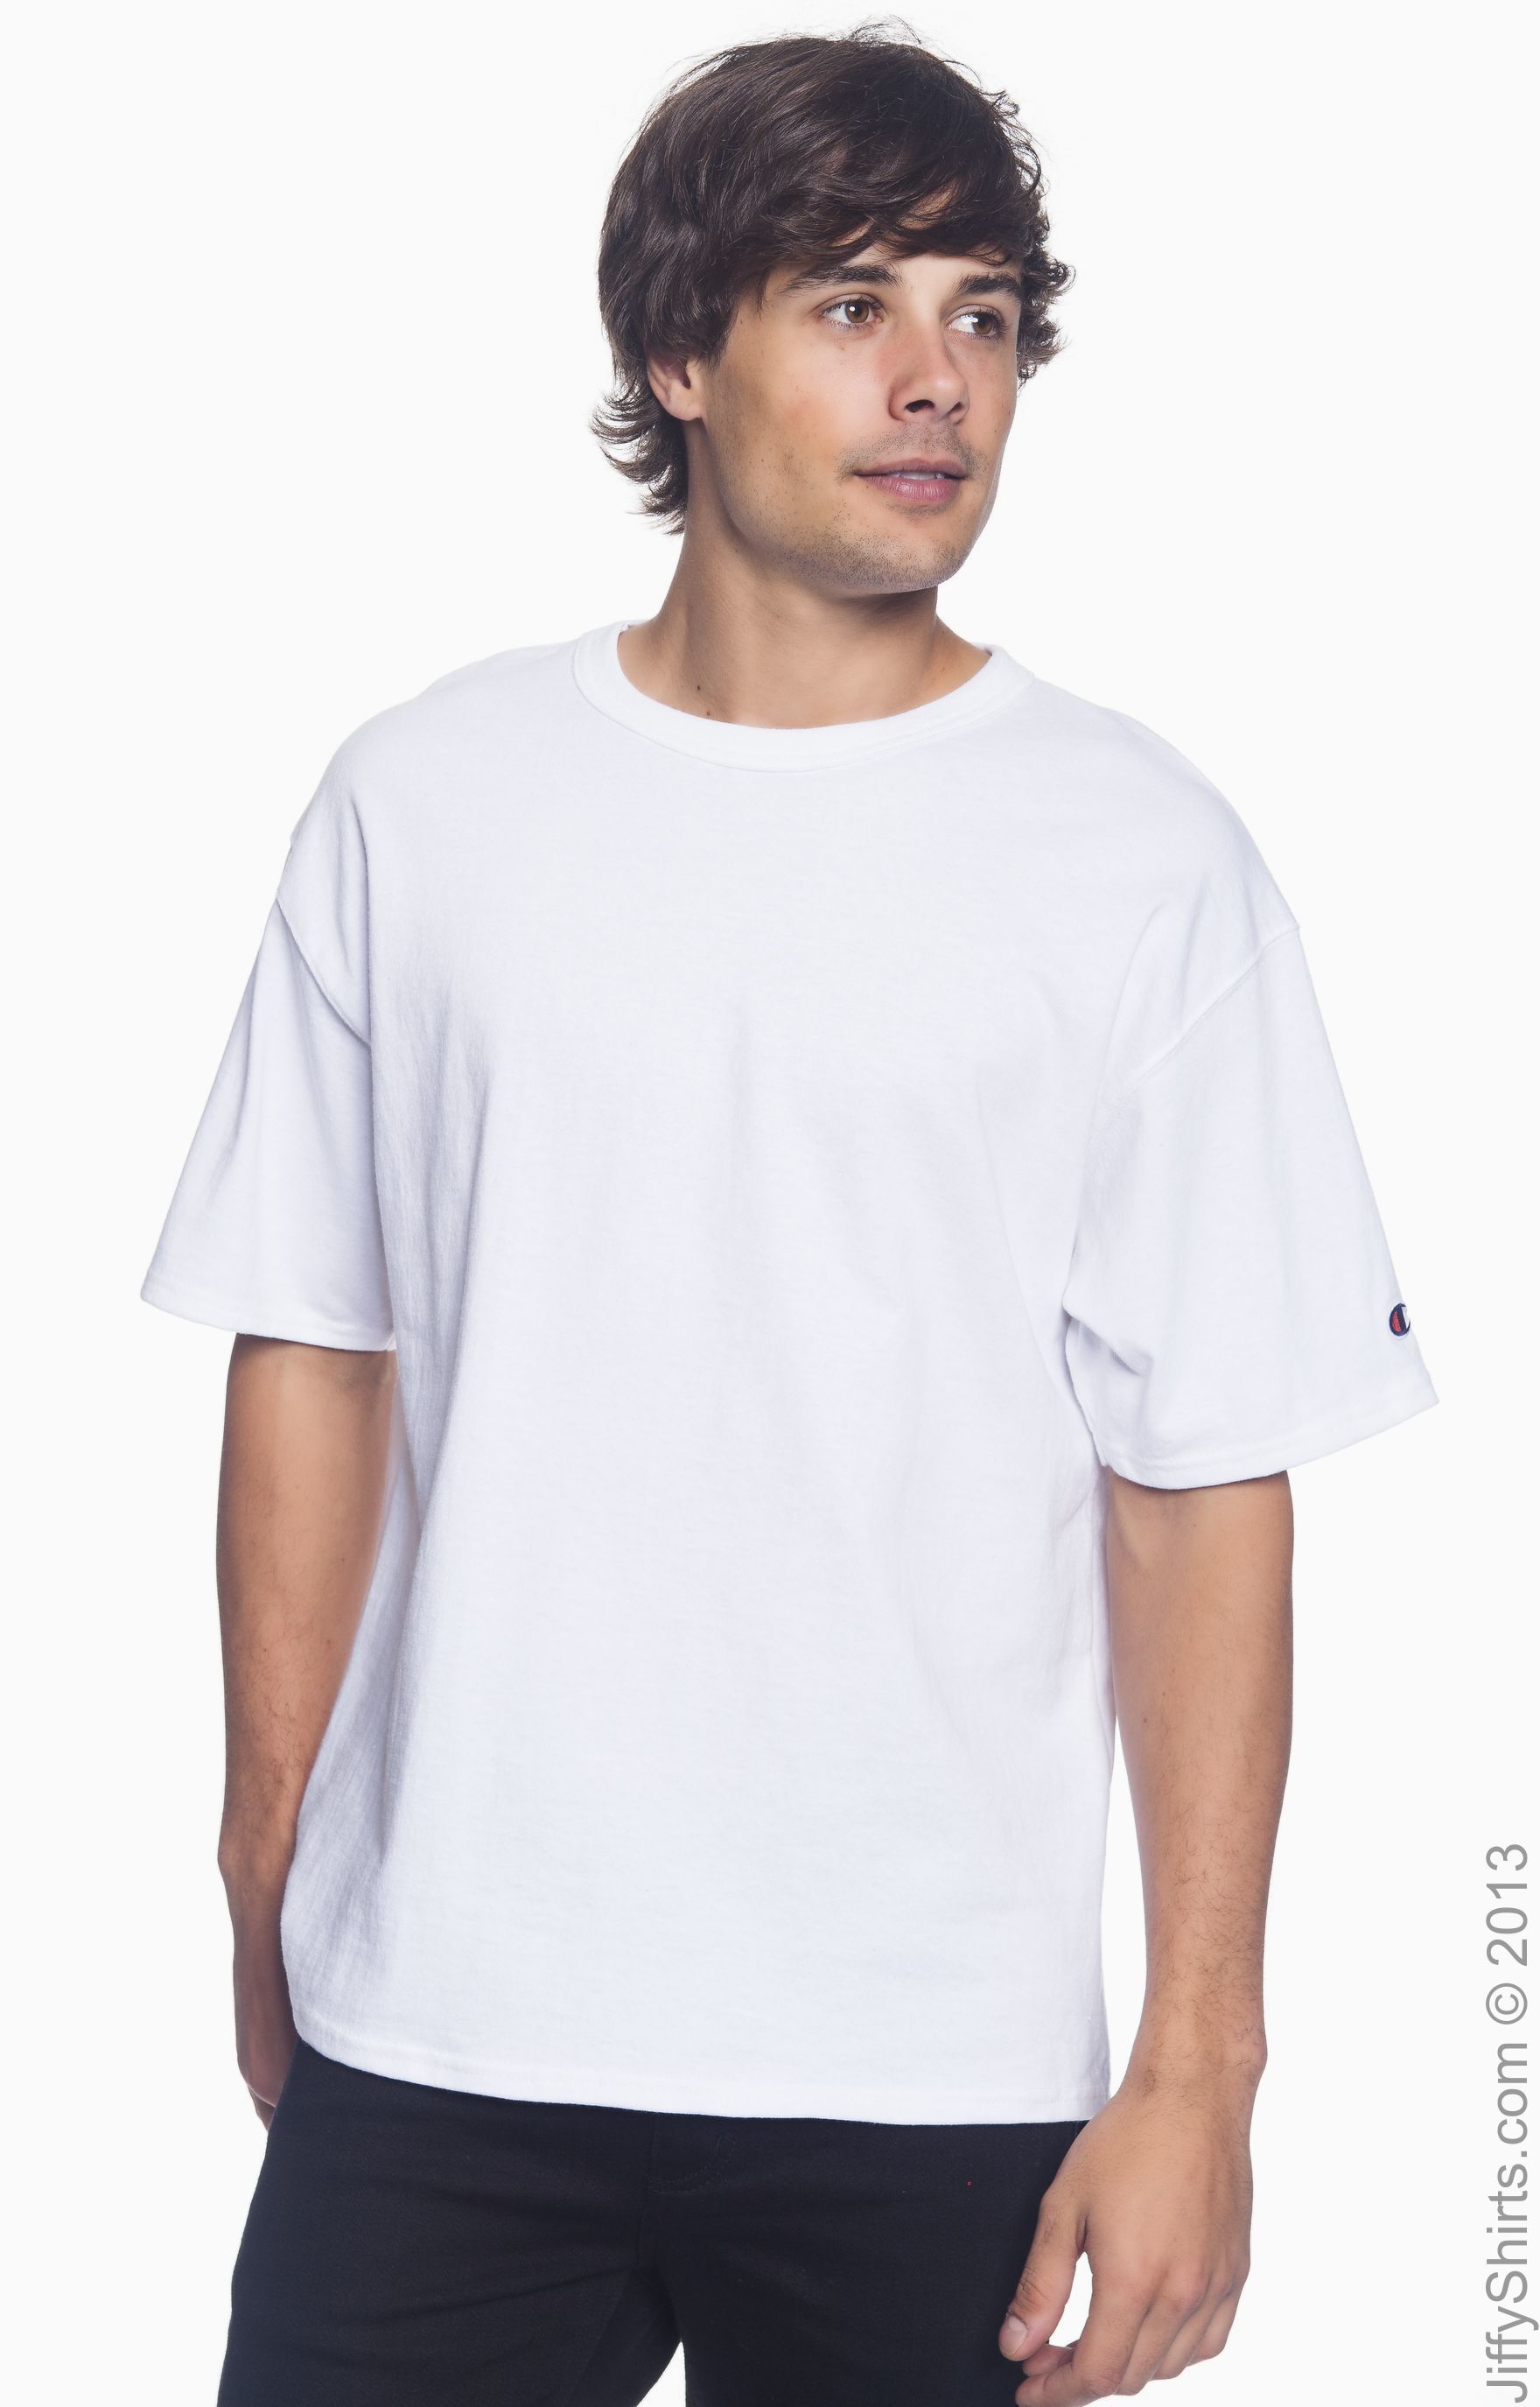 price of champion t shirt